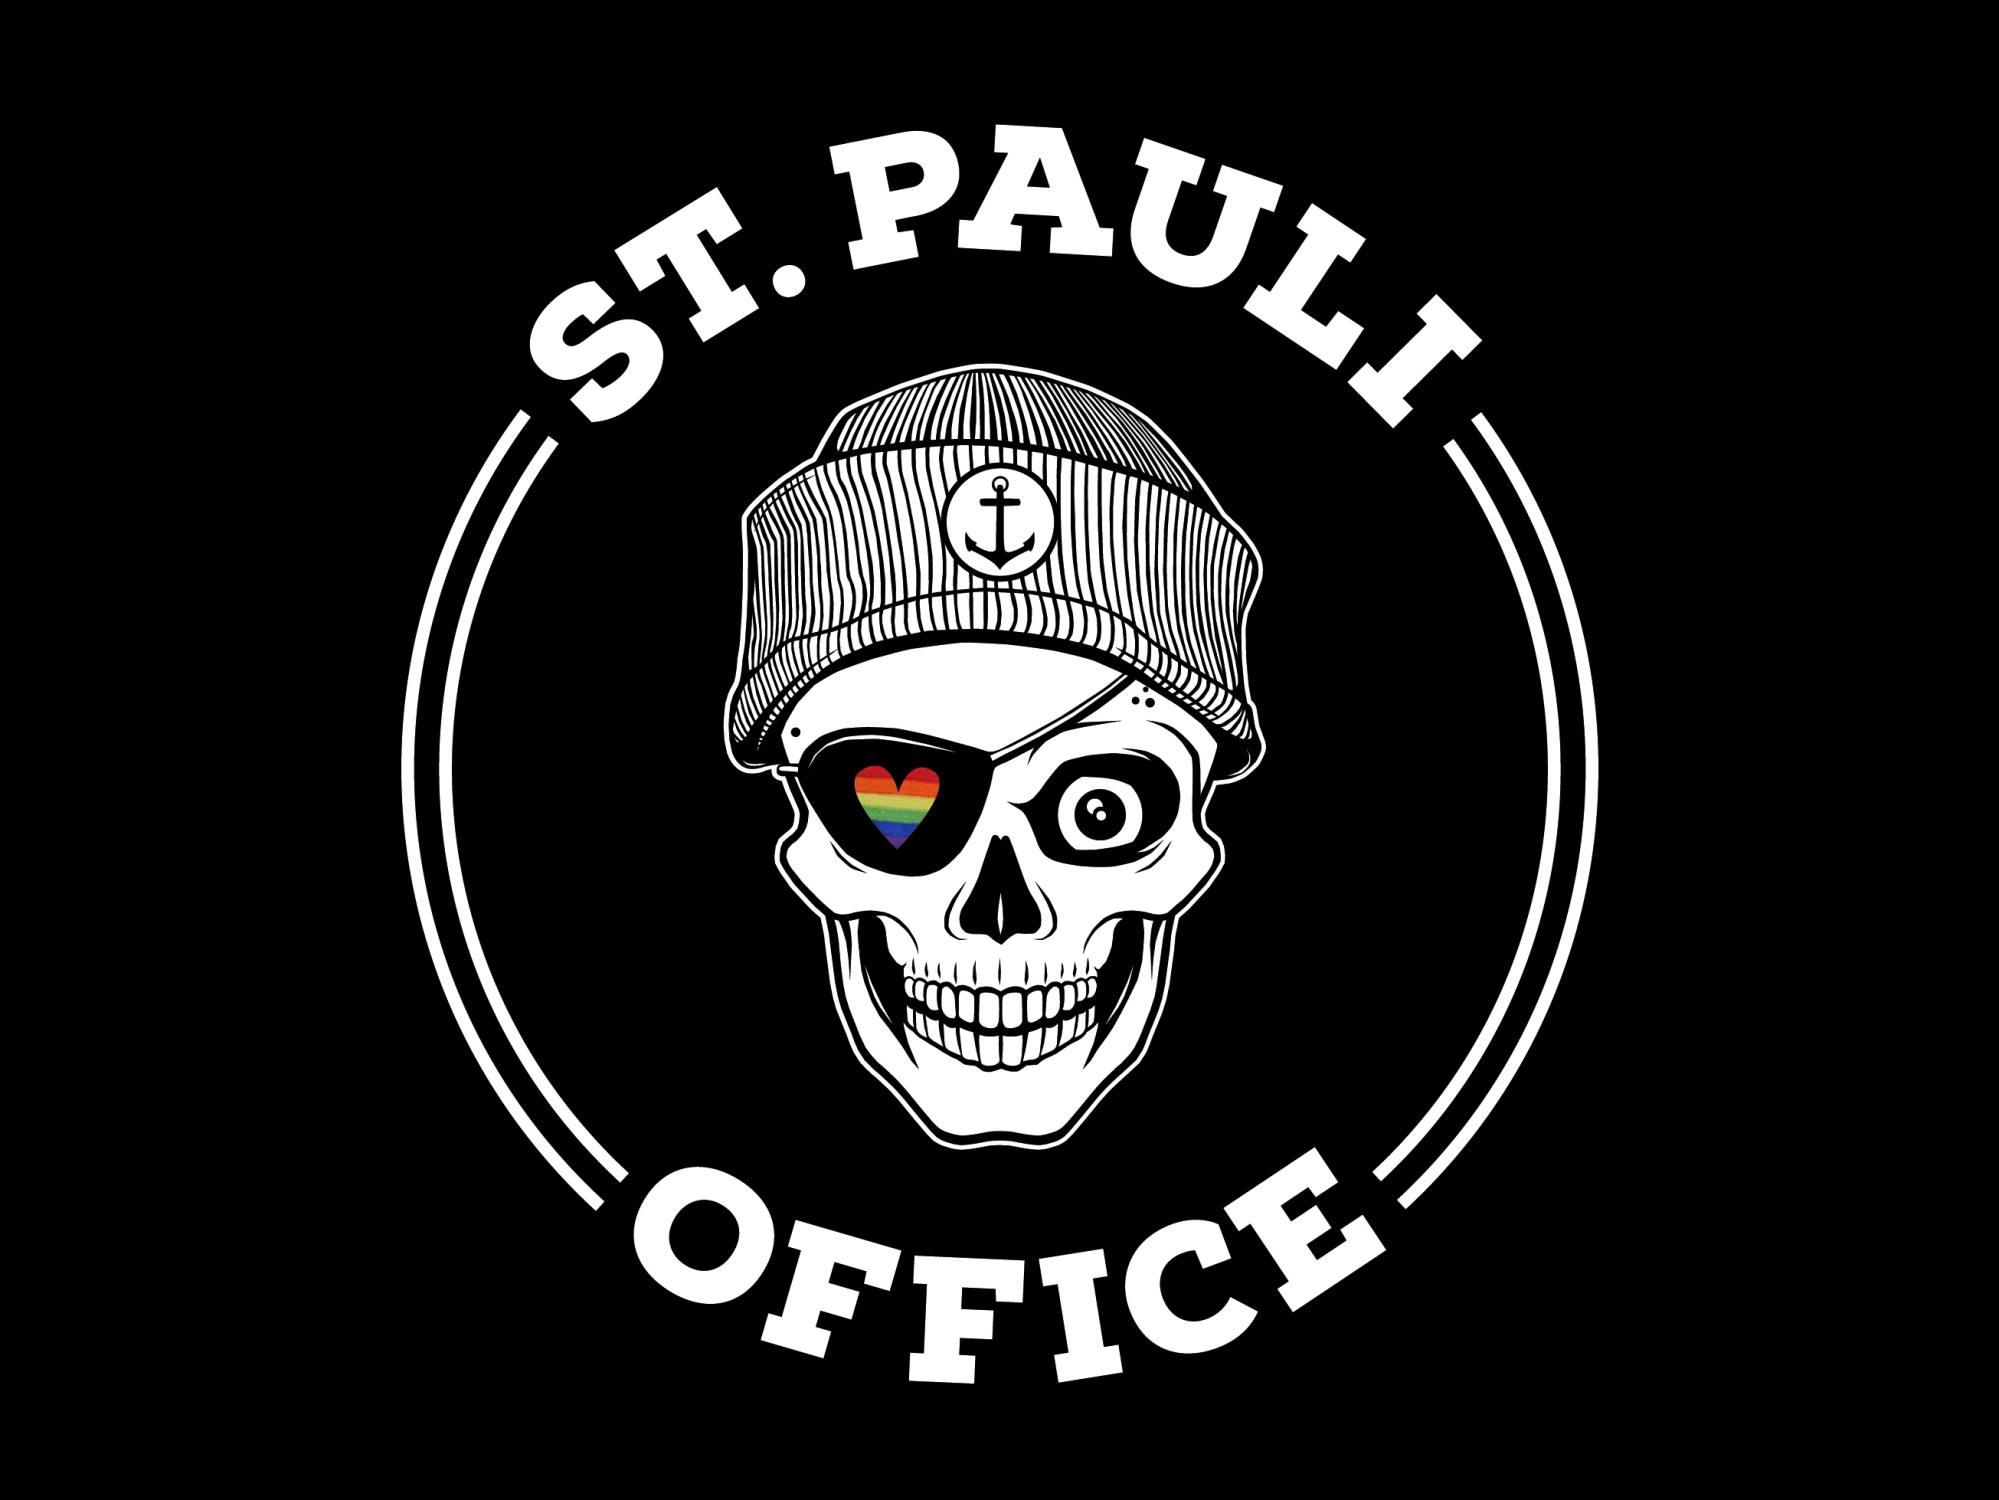 St. Pauli Queer Tour: 100 Years of Pride